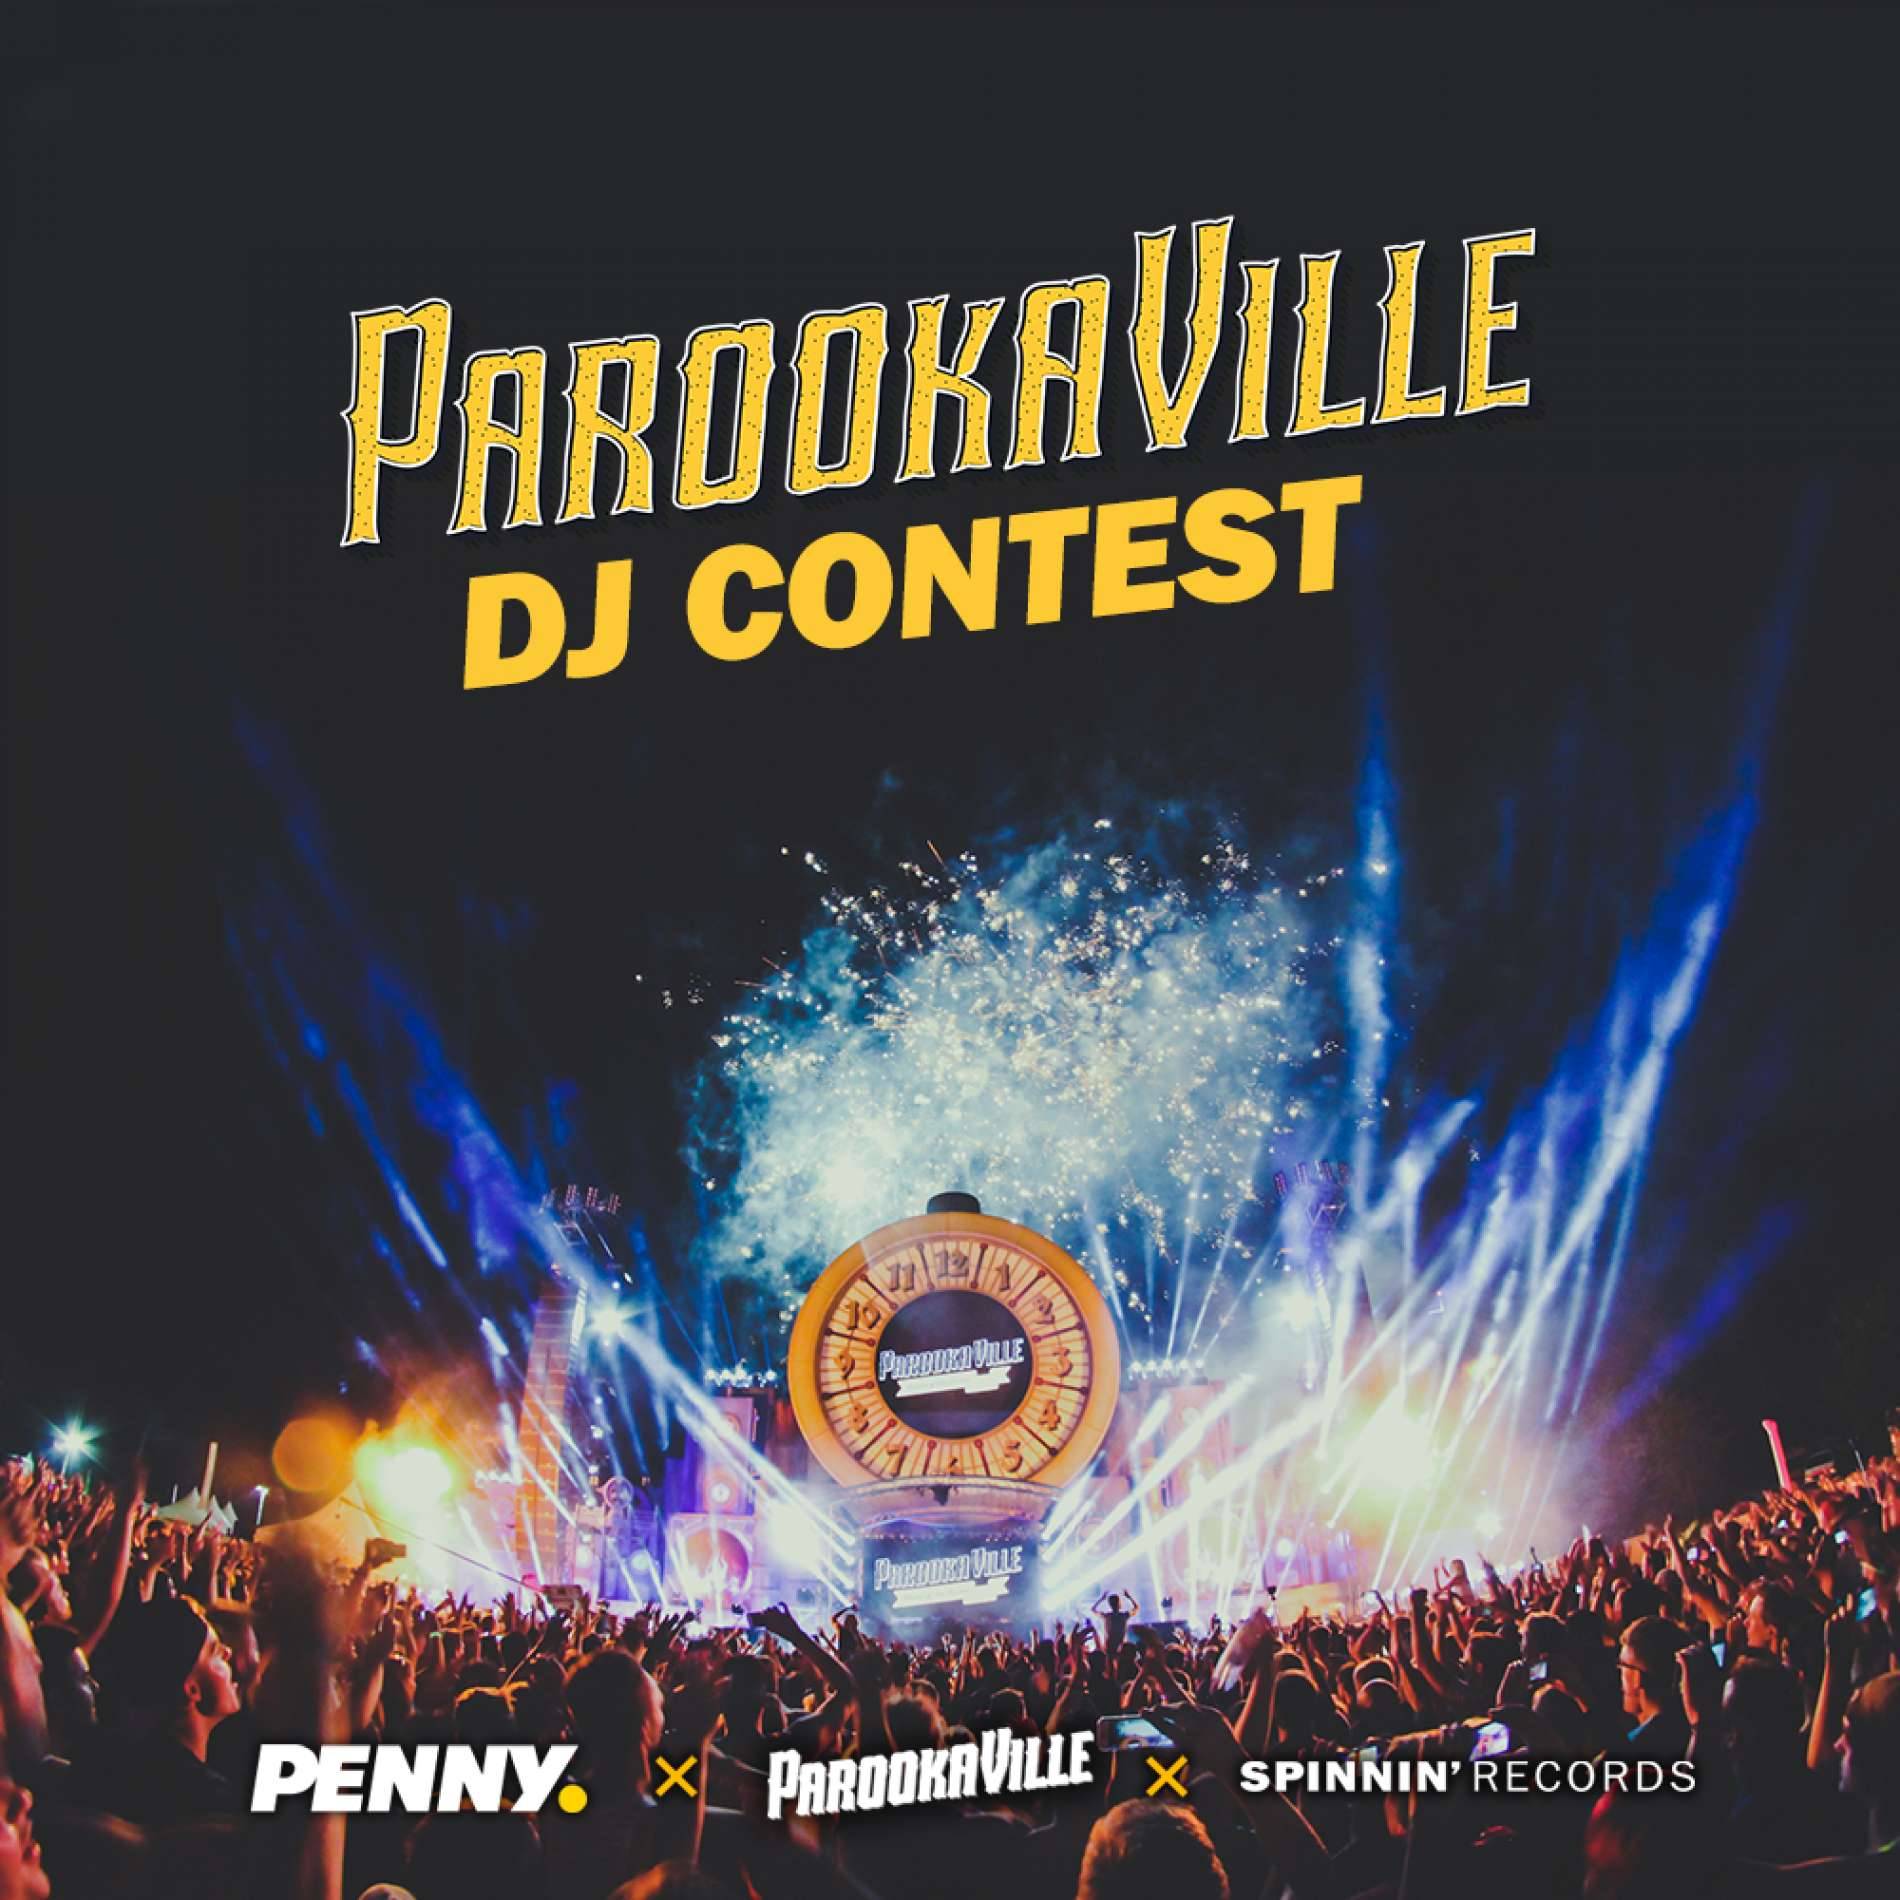 Parookaville DJ Contest - The Finalists